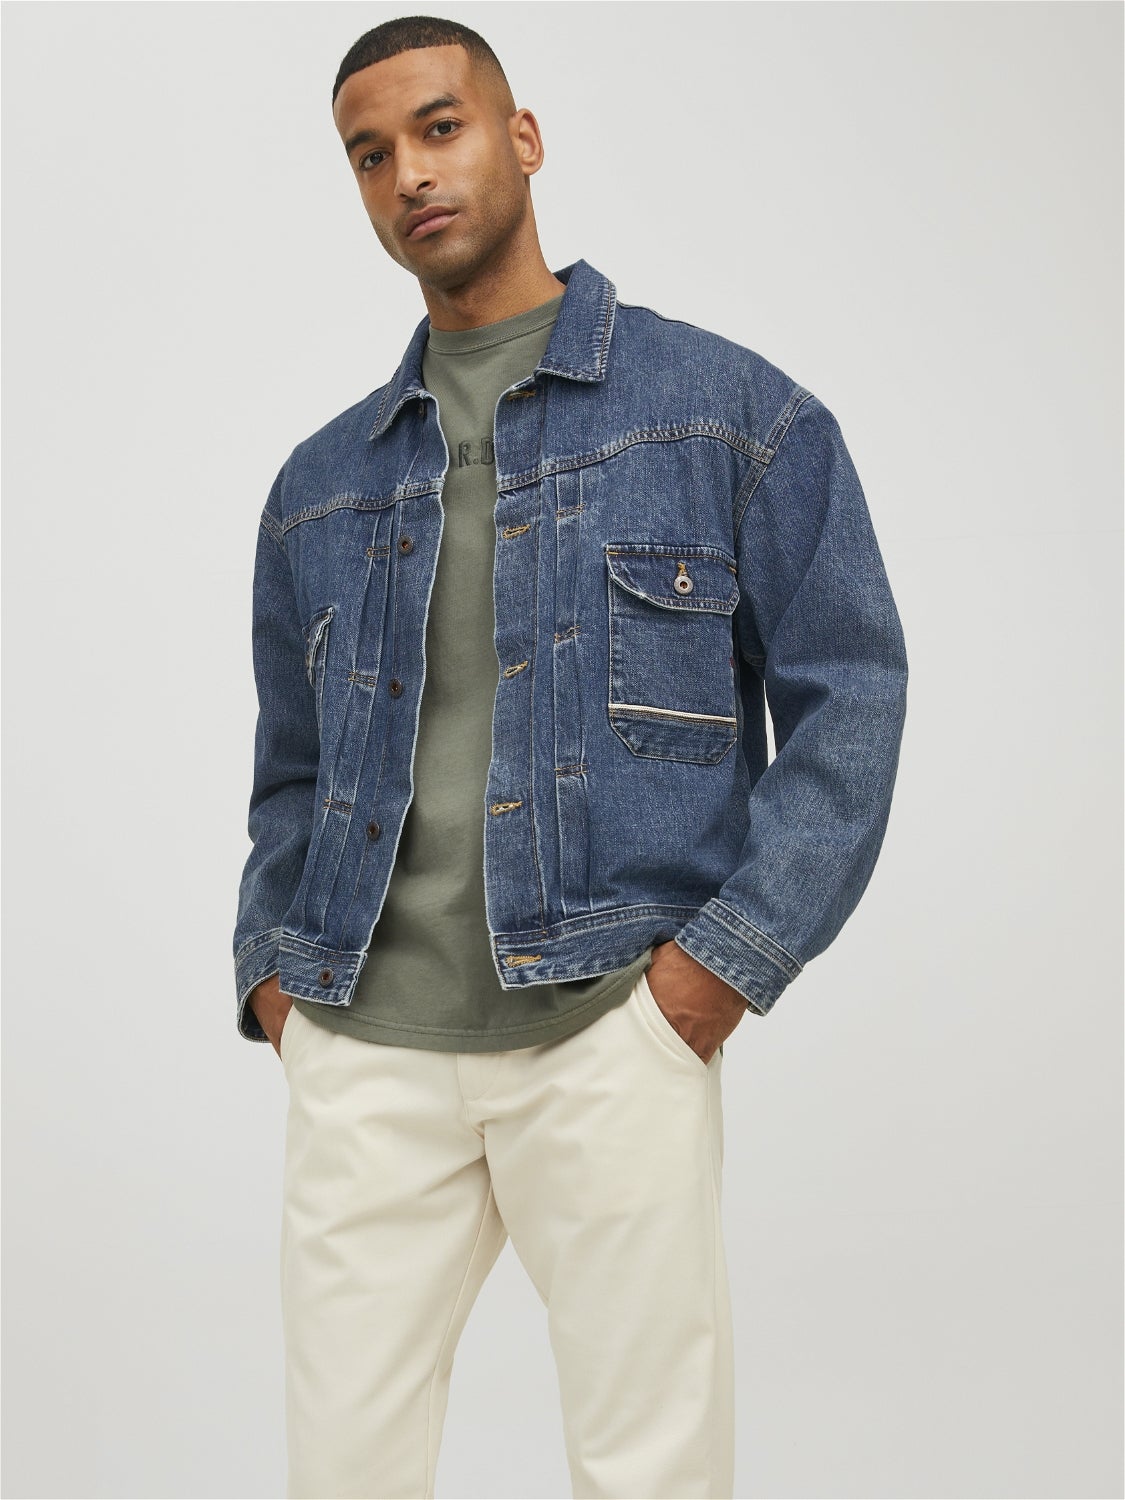 Jack & Jones Jack & Jones denim jacket Navy Blue L discount 63% MEN FASHION Jackets Jean 